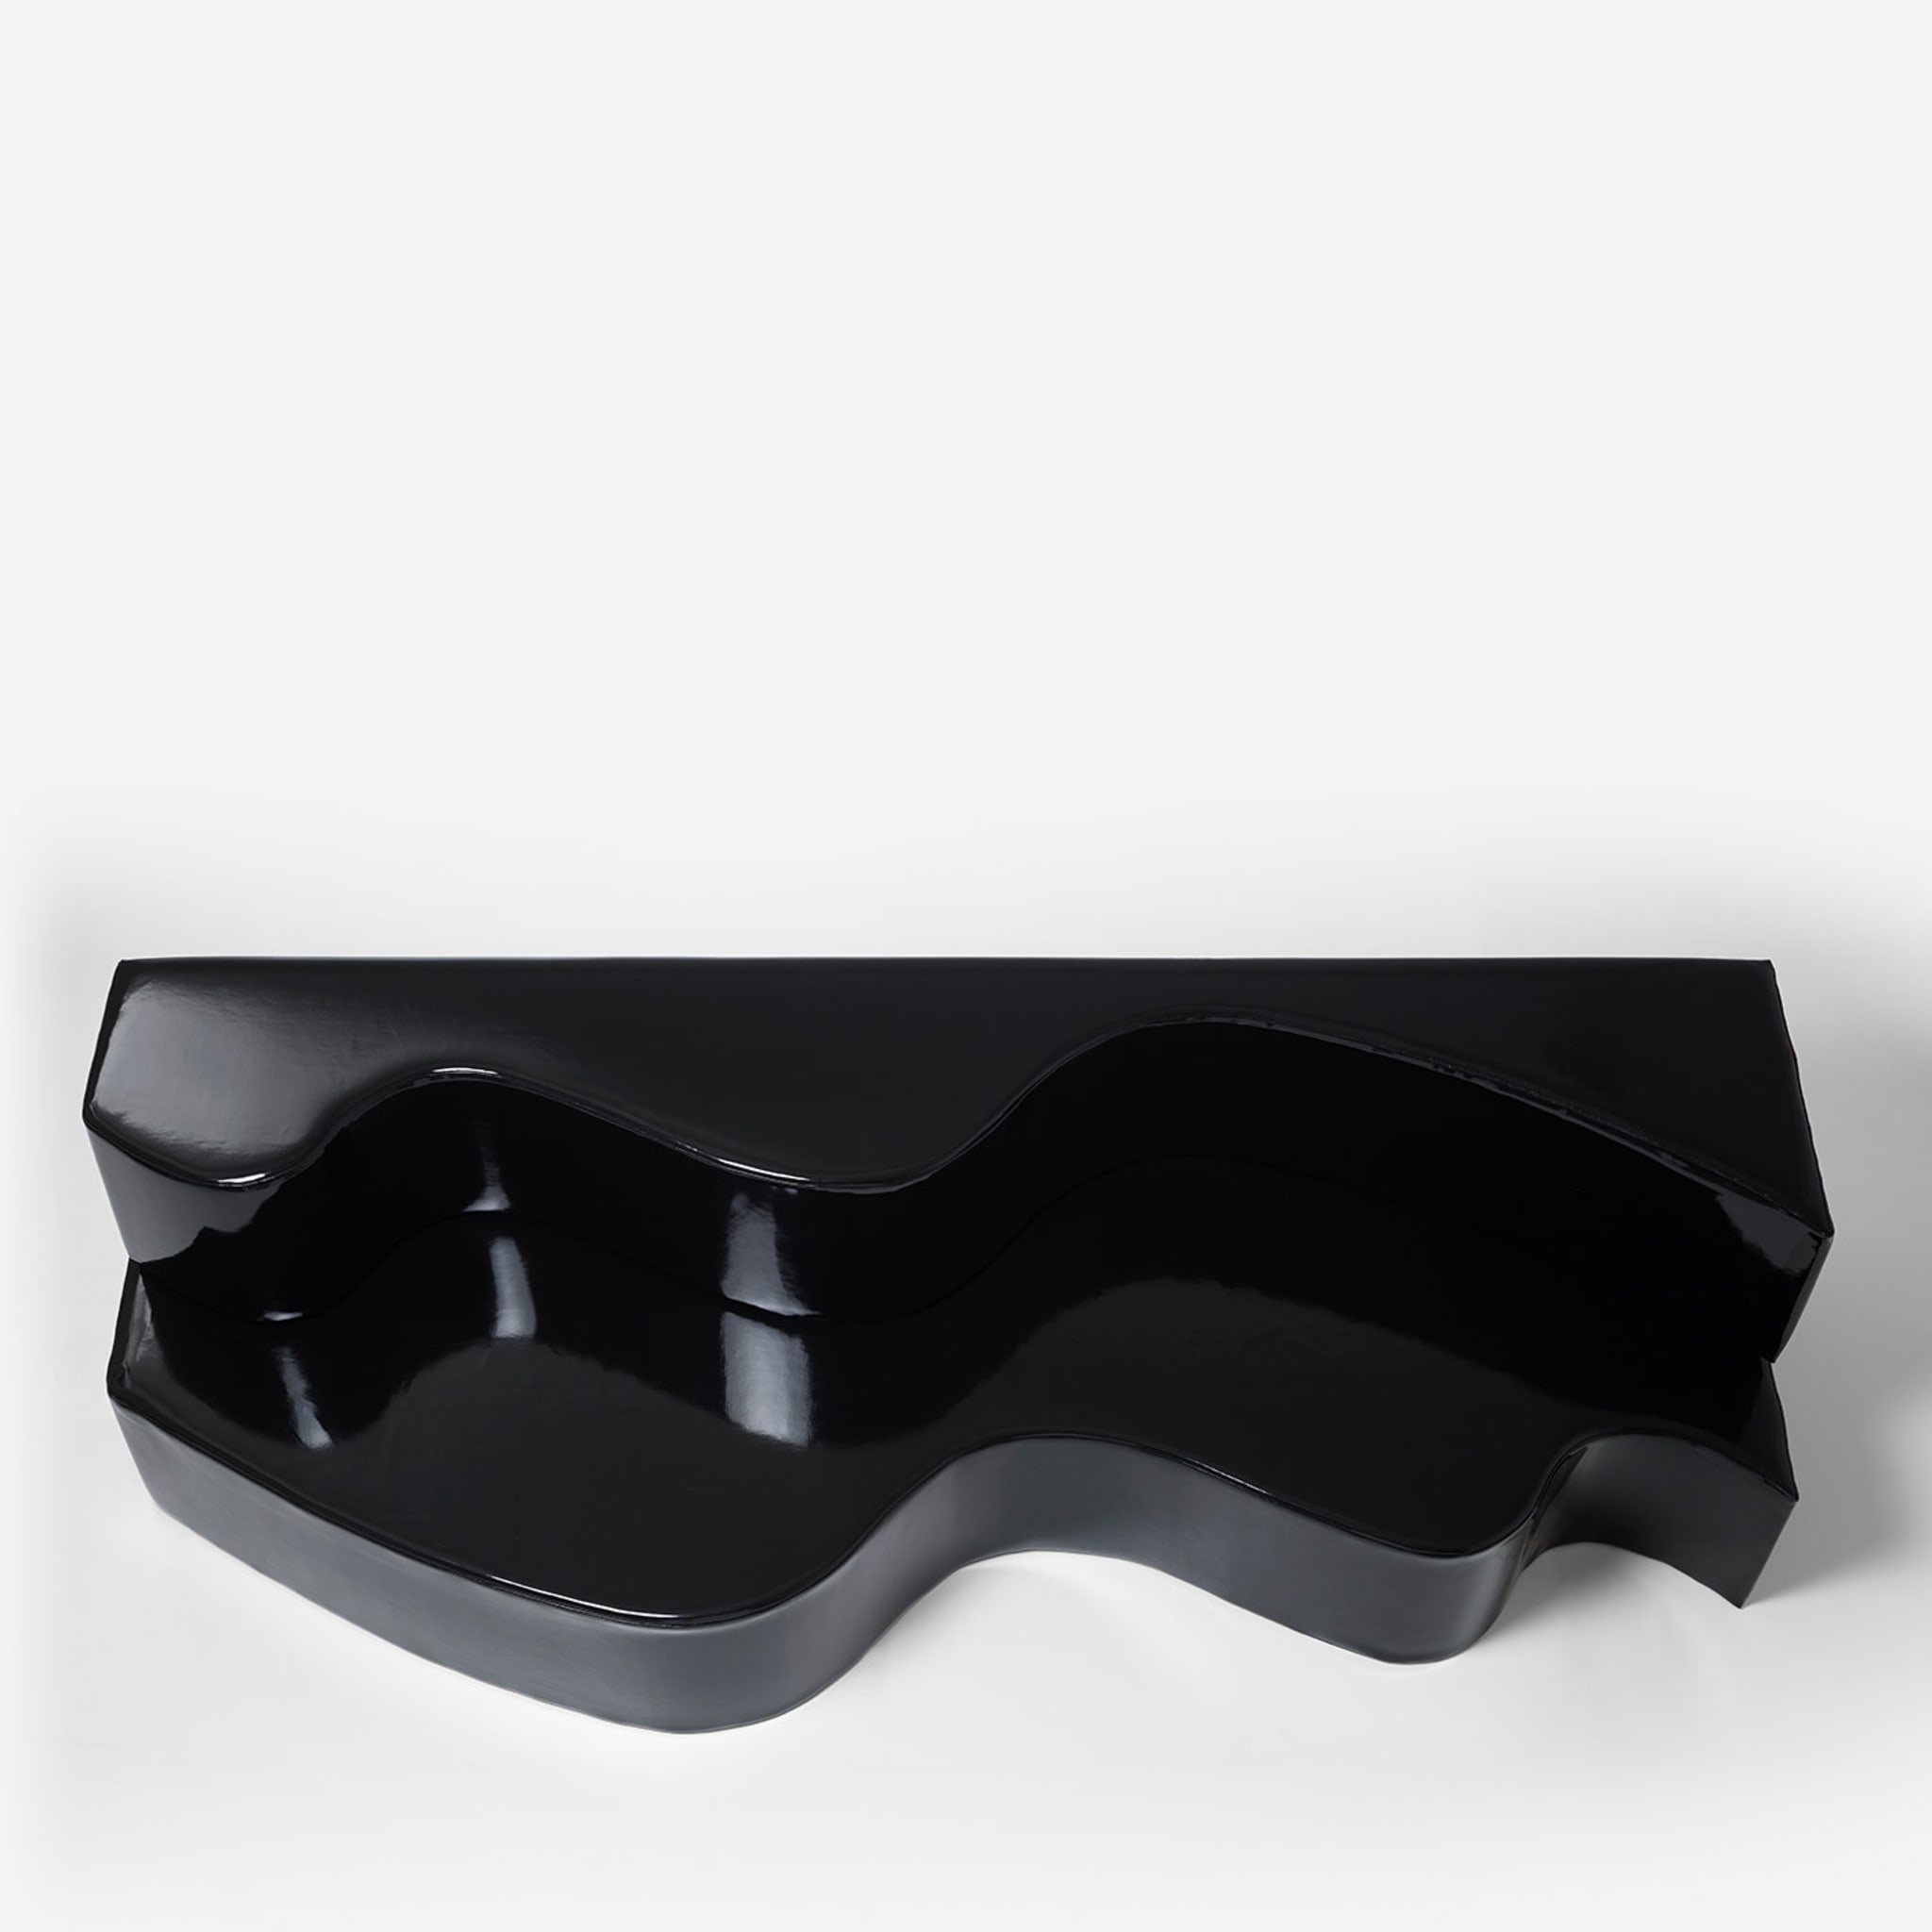 Superonda Black Sofa by Archizoom - Alternative view 1